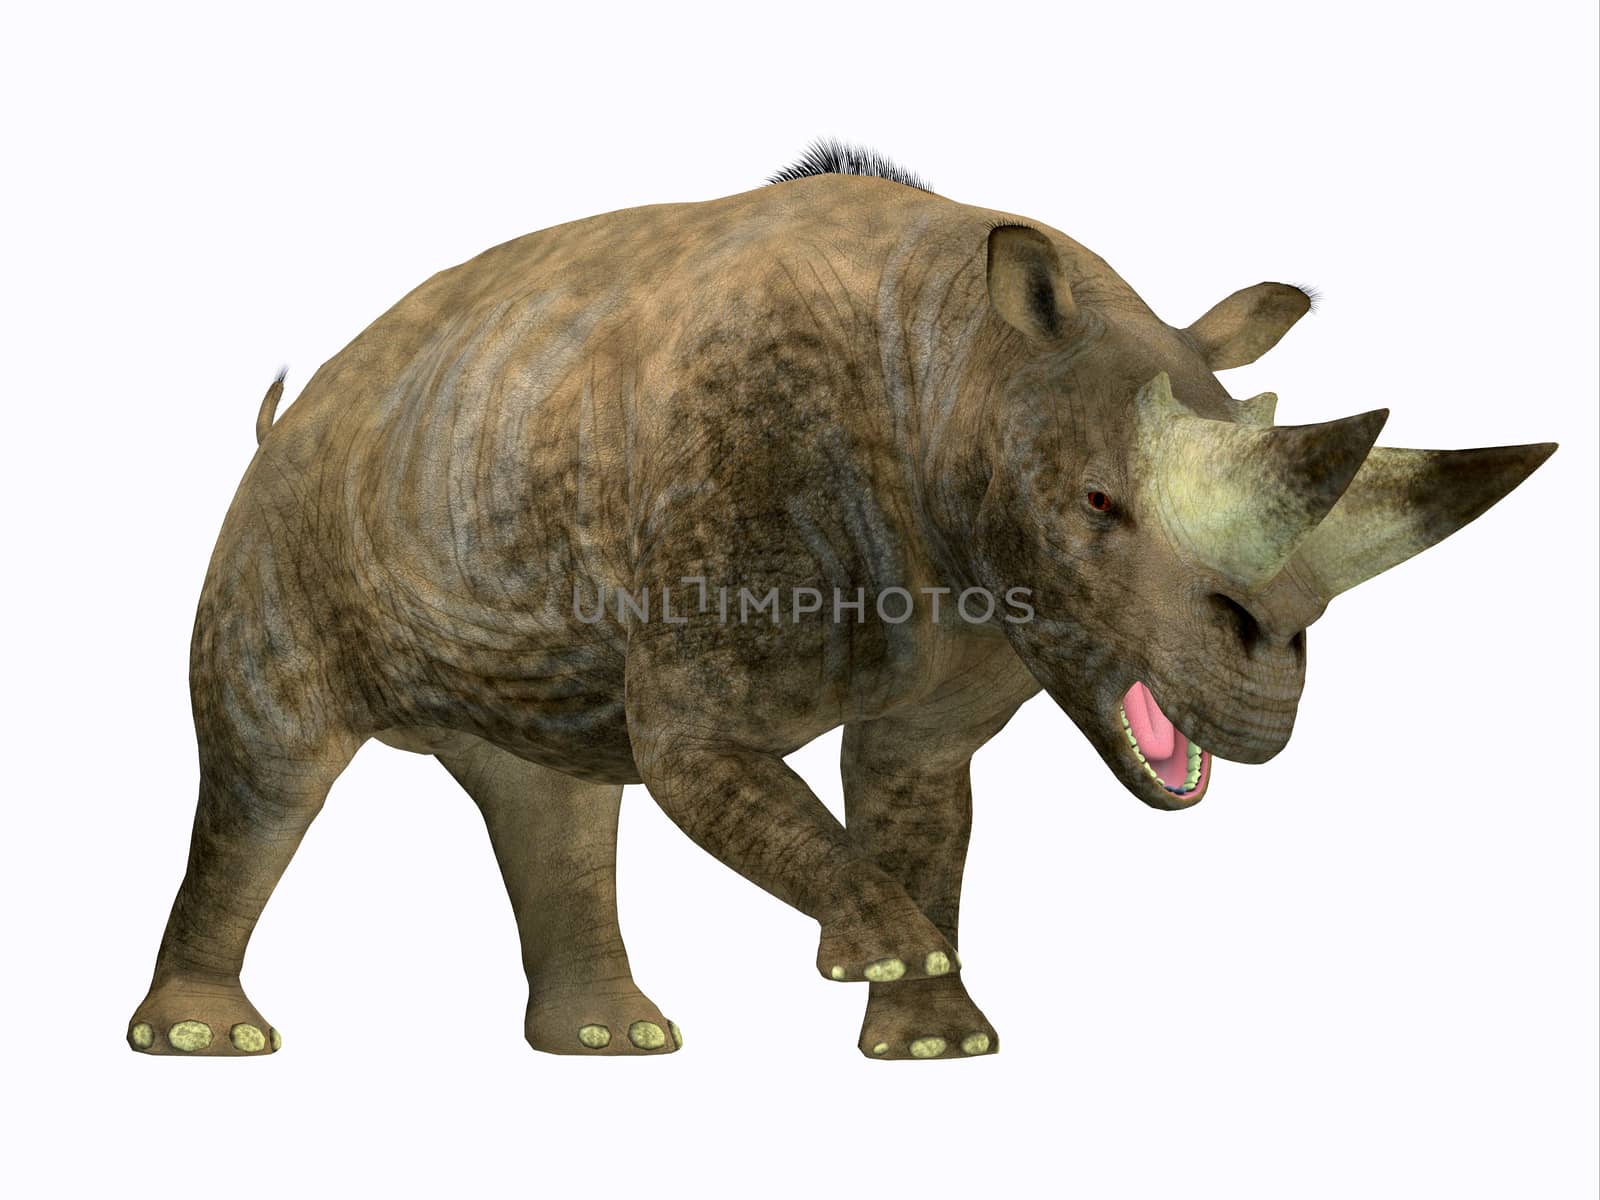 Arsinoitherium Mammal Side Profile by Catmando